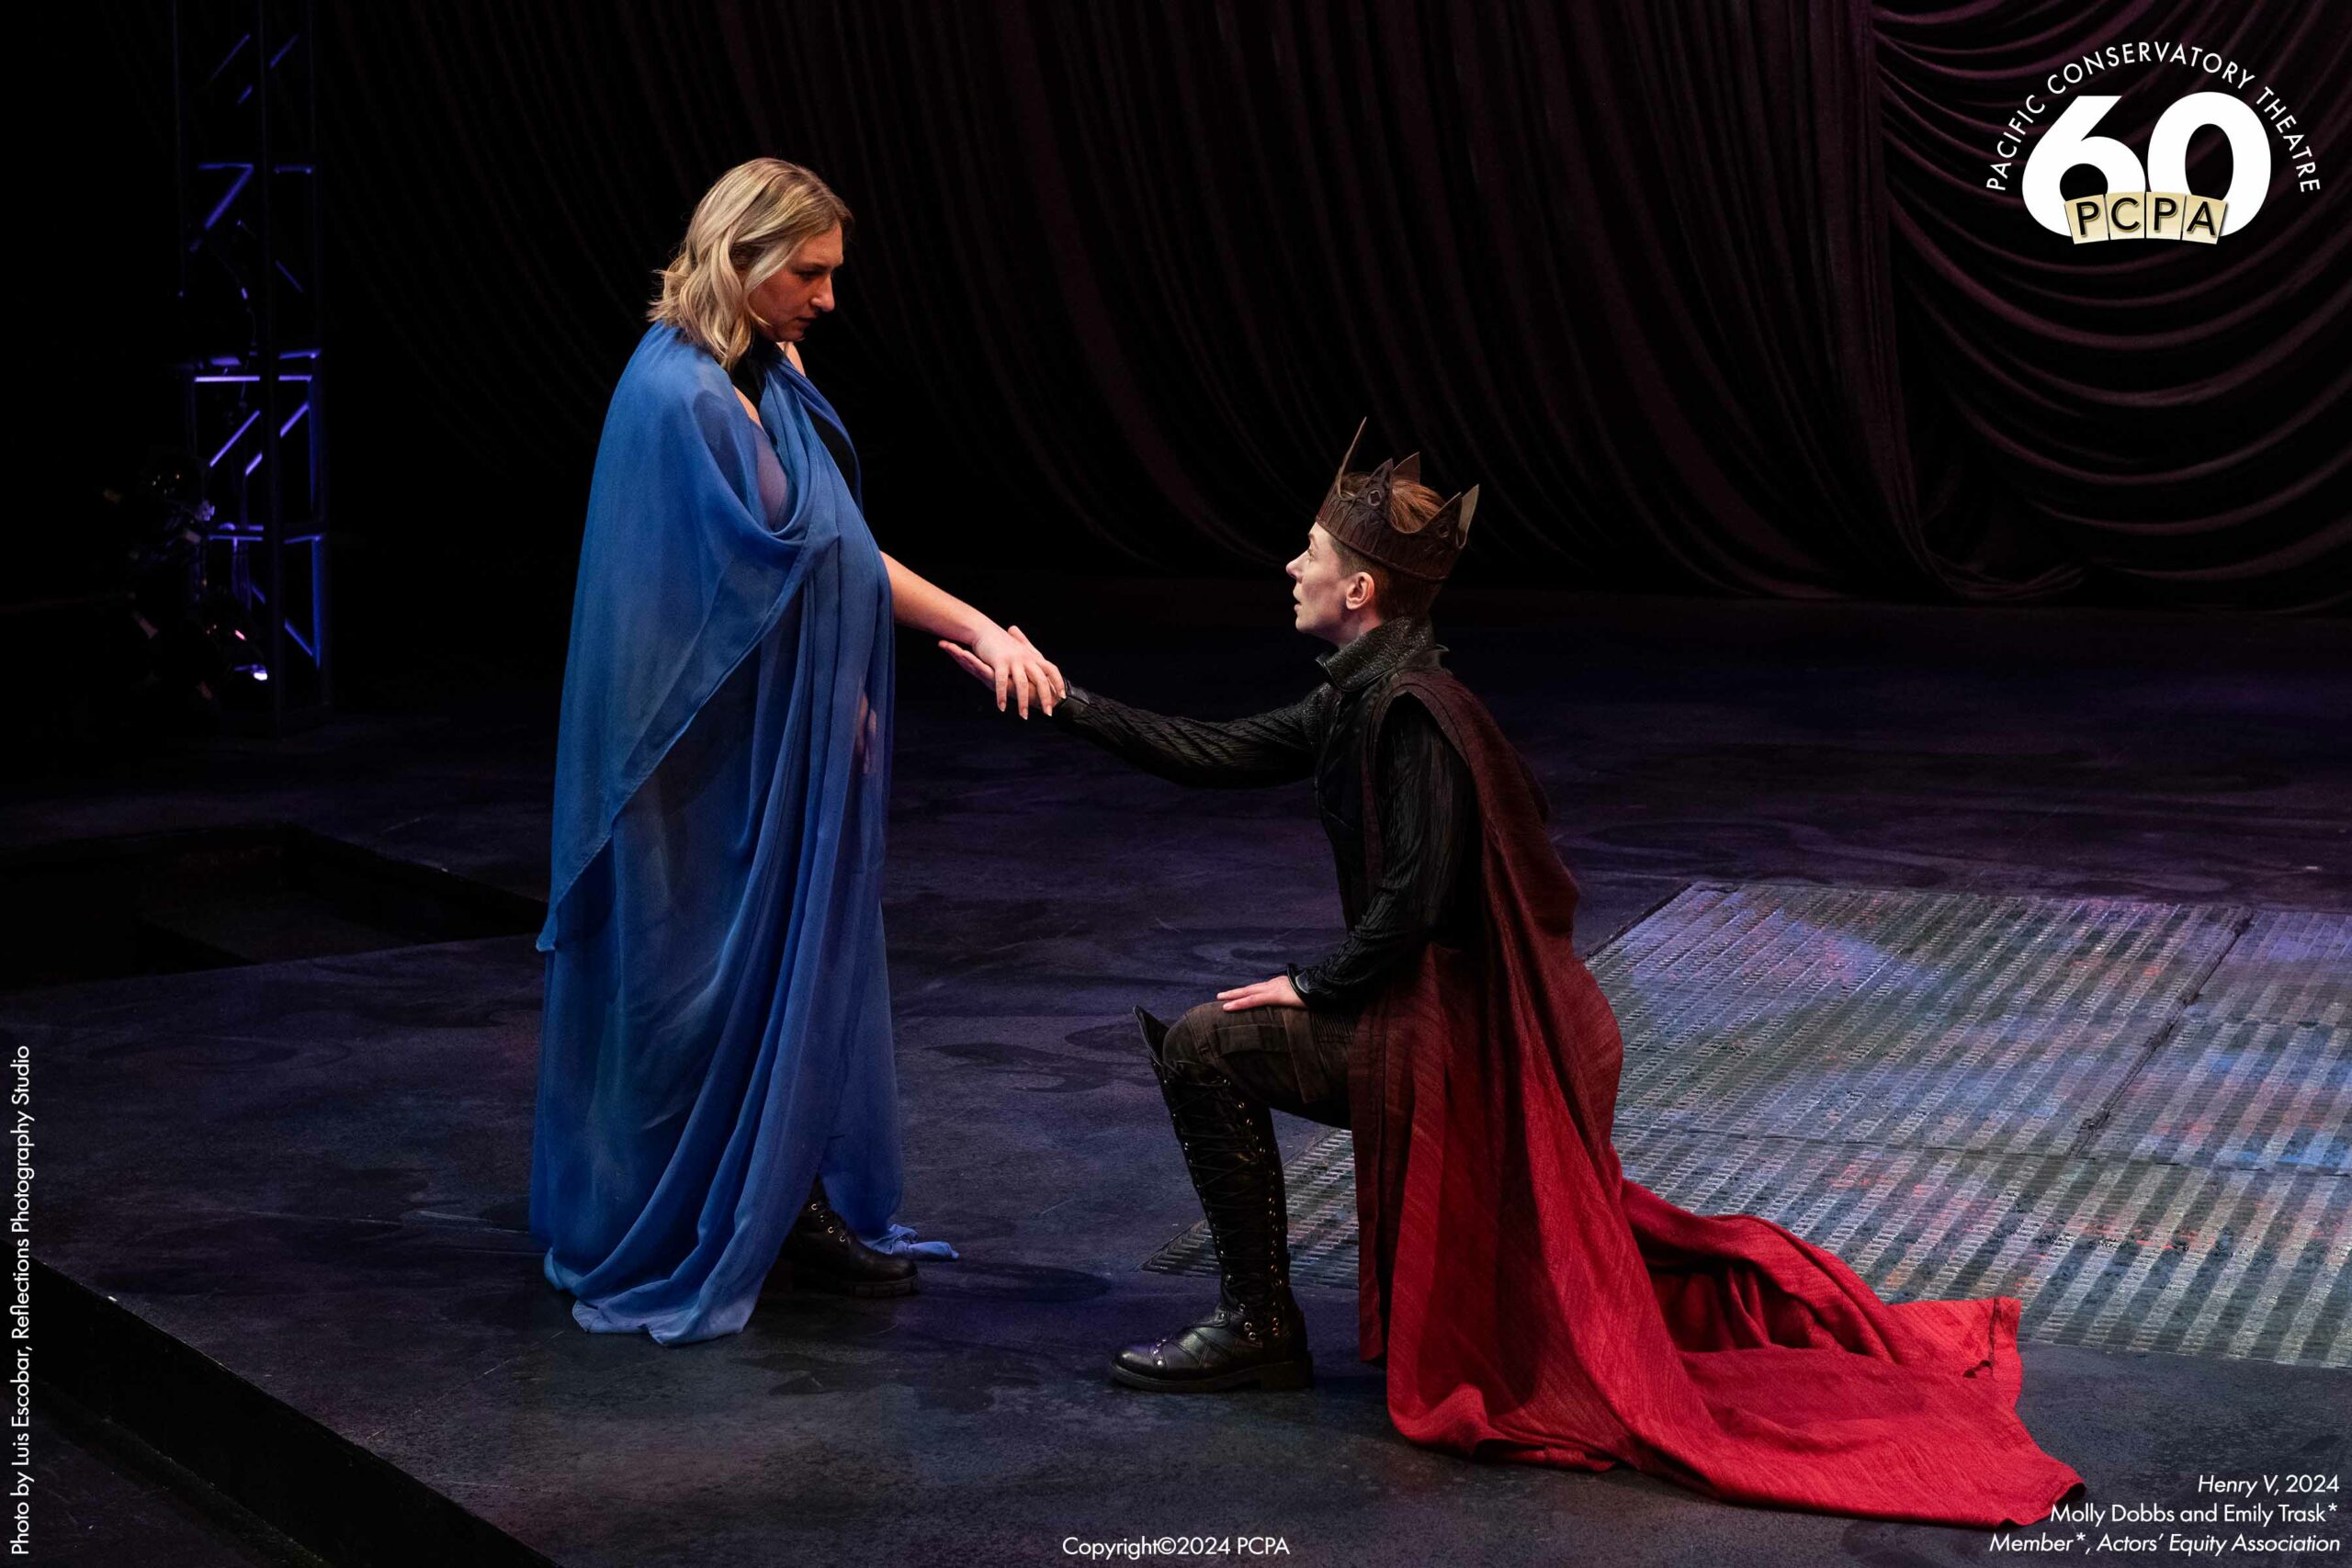 Henry V proposing to the princess